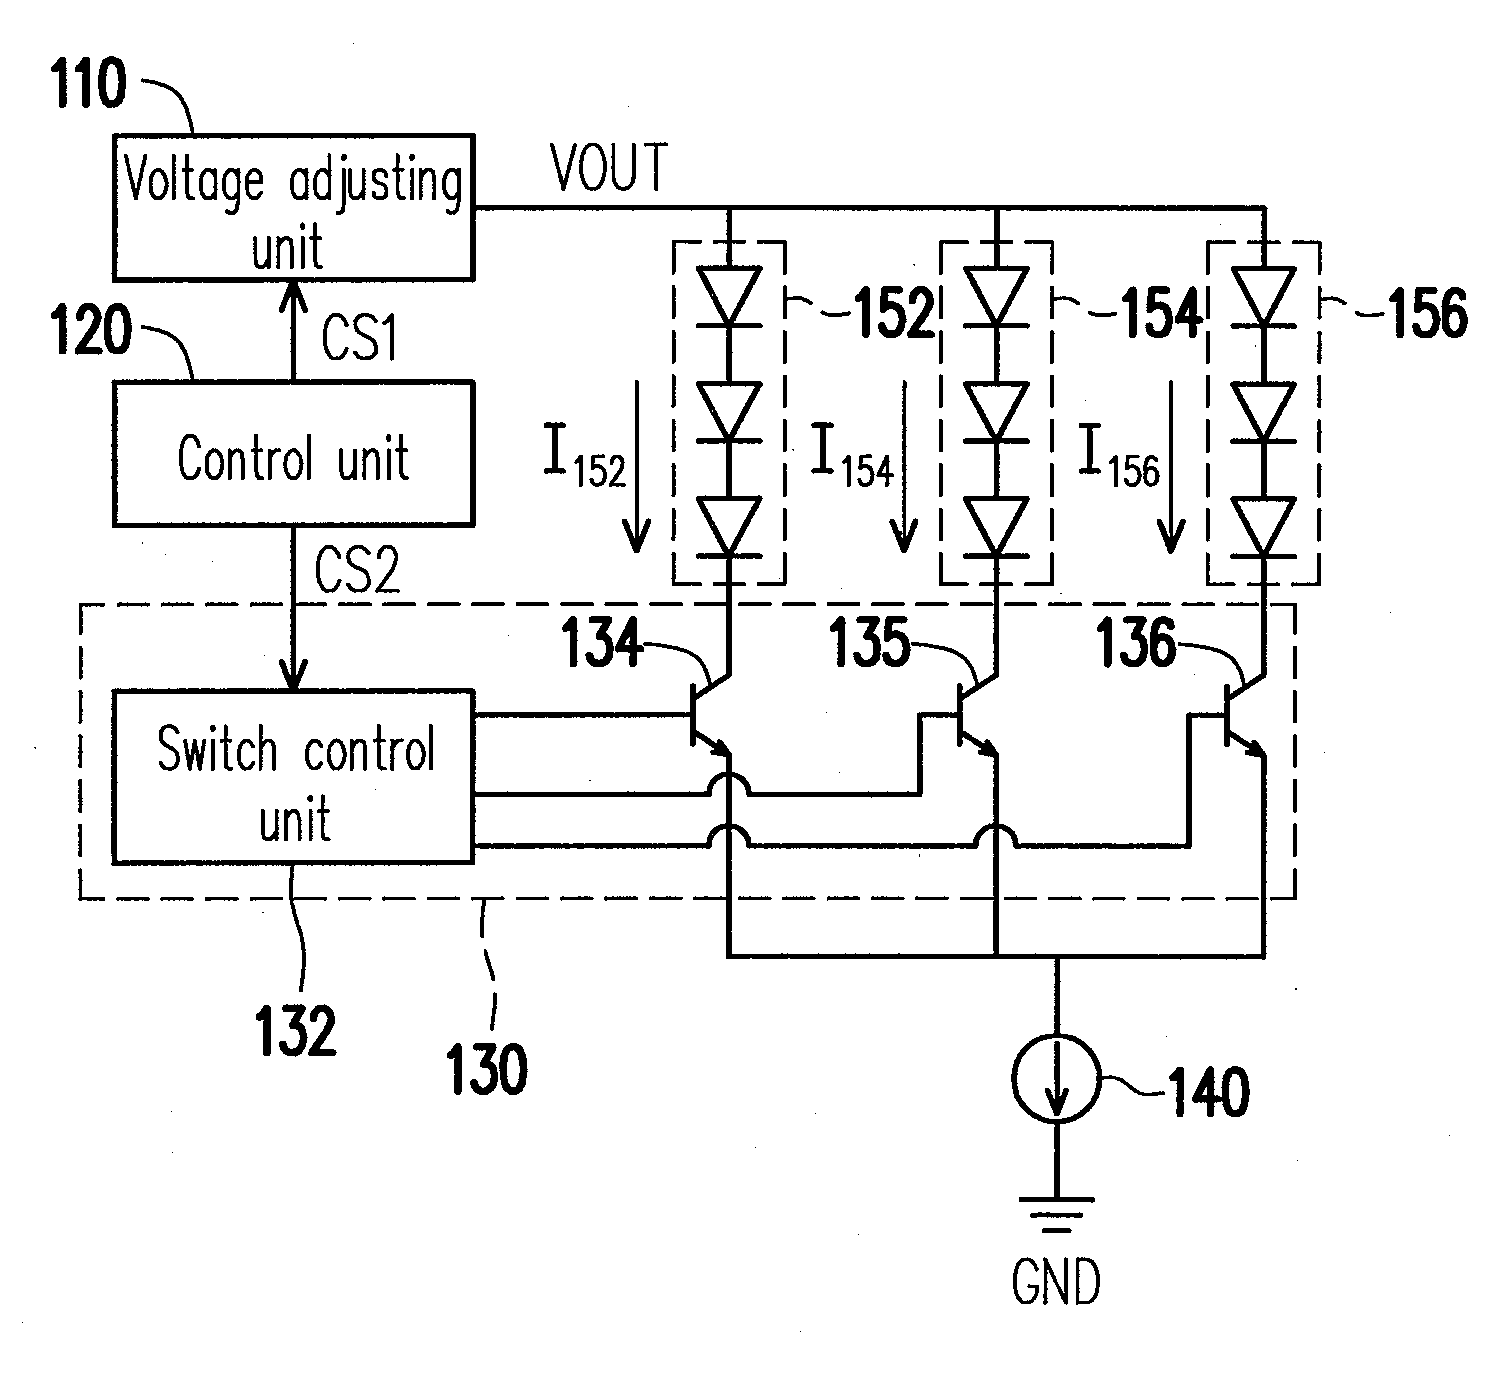 Light emitting diode (LED) driving circuit